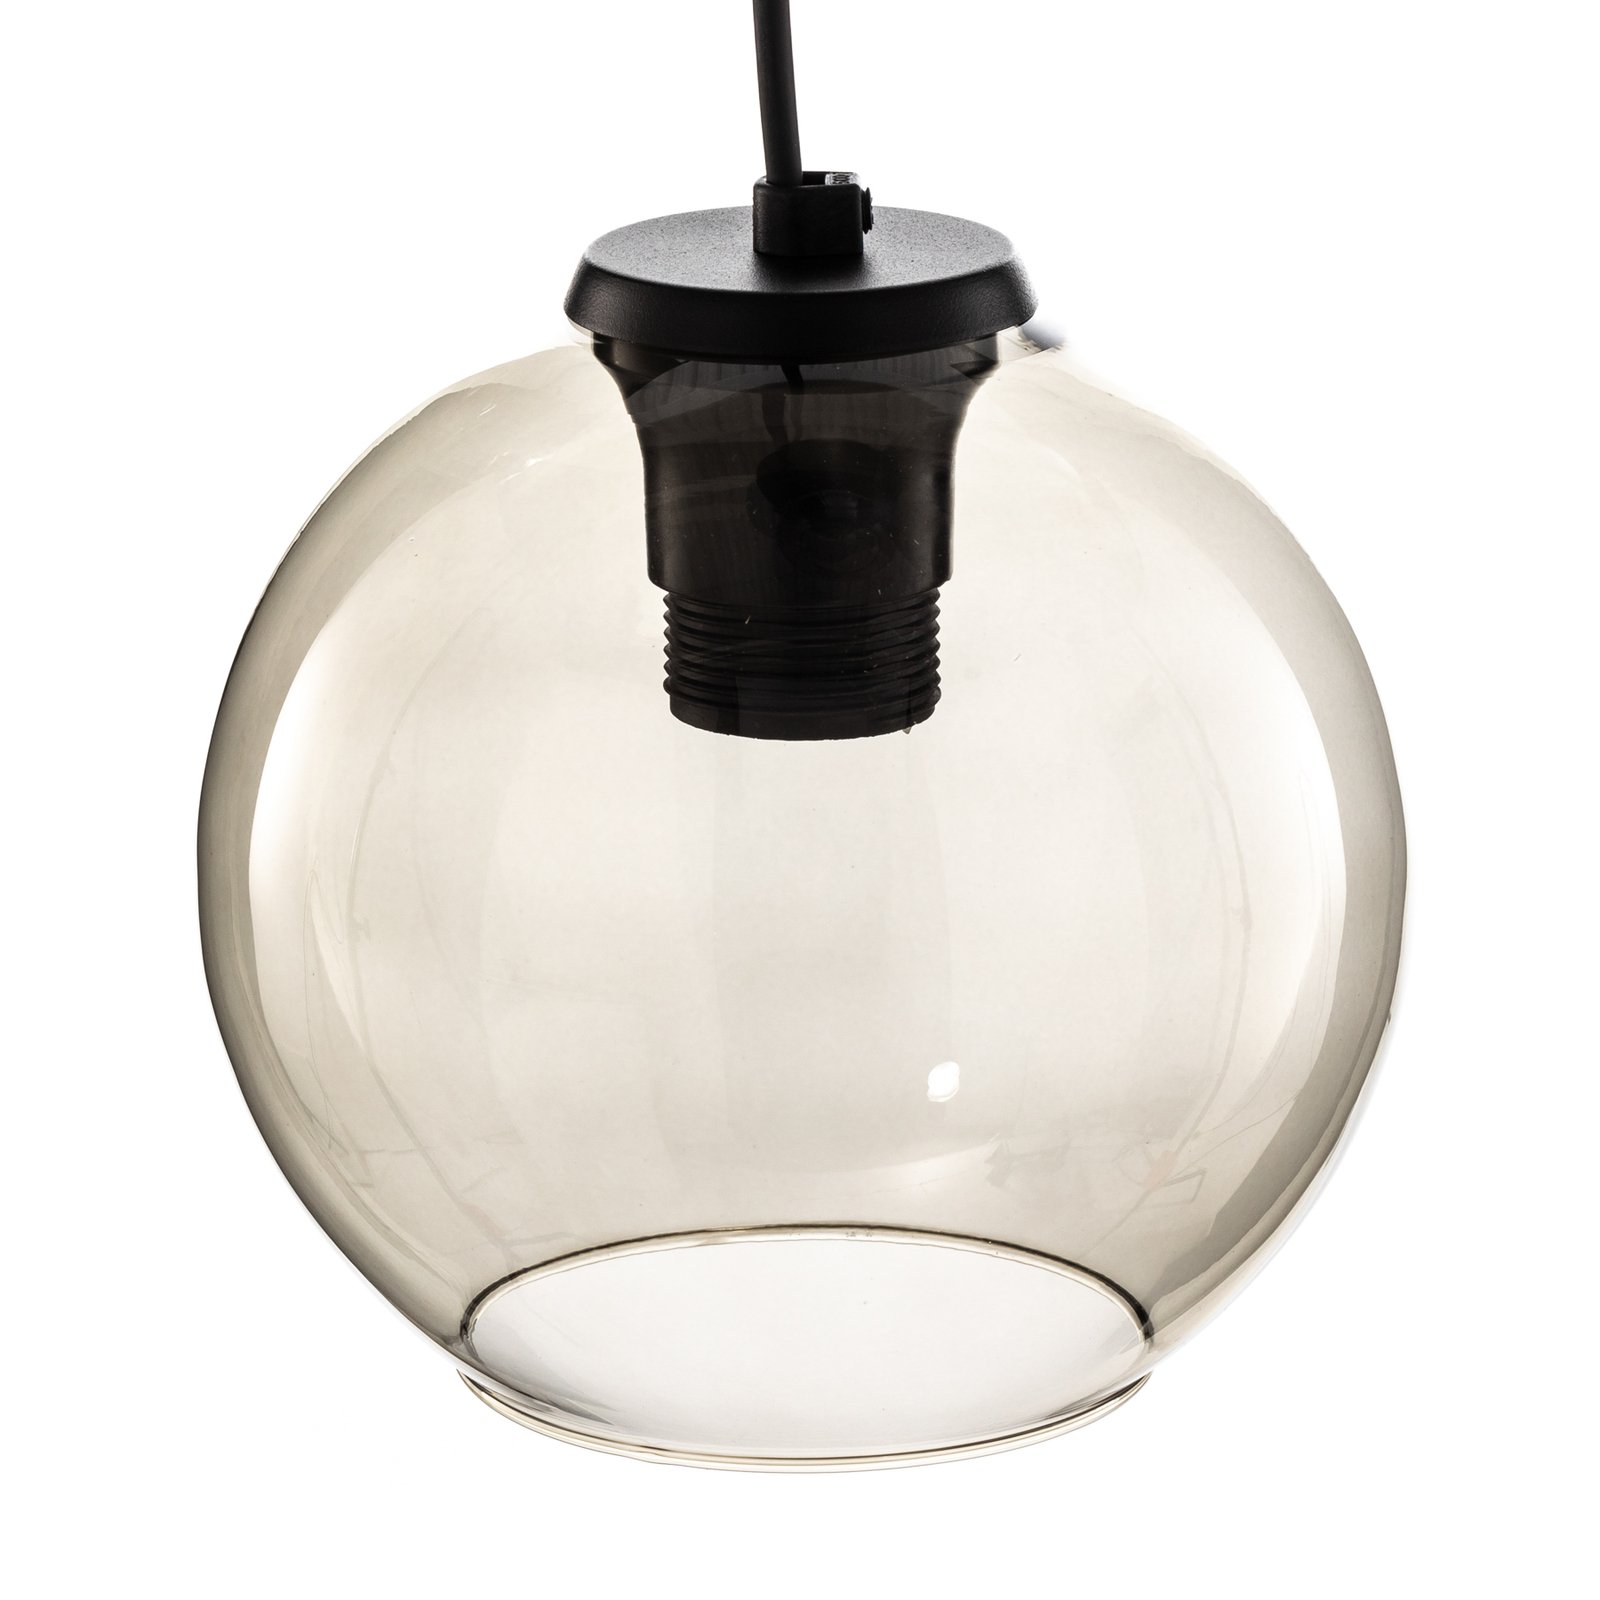 Vetro hanglamp van glas, 3-lamps